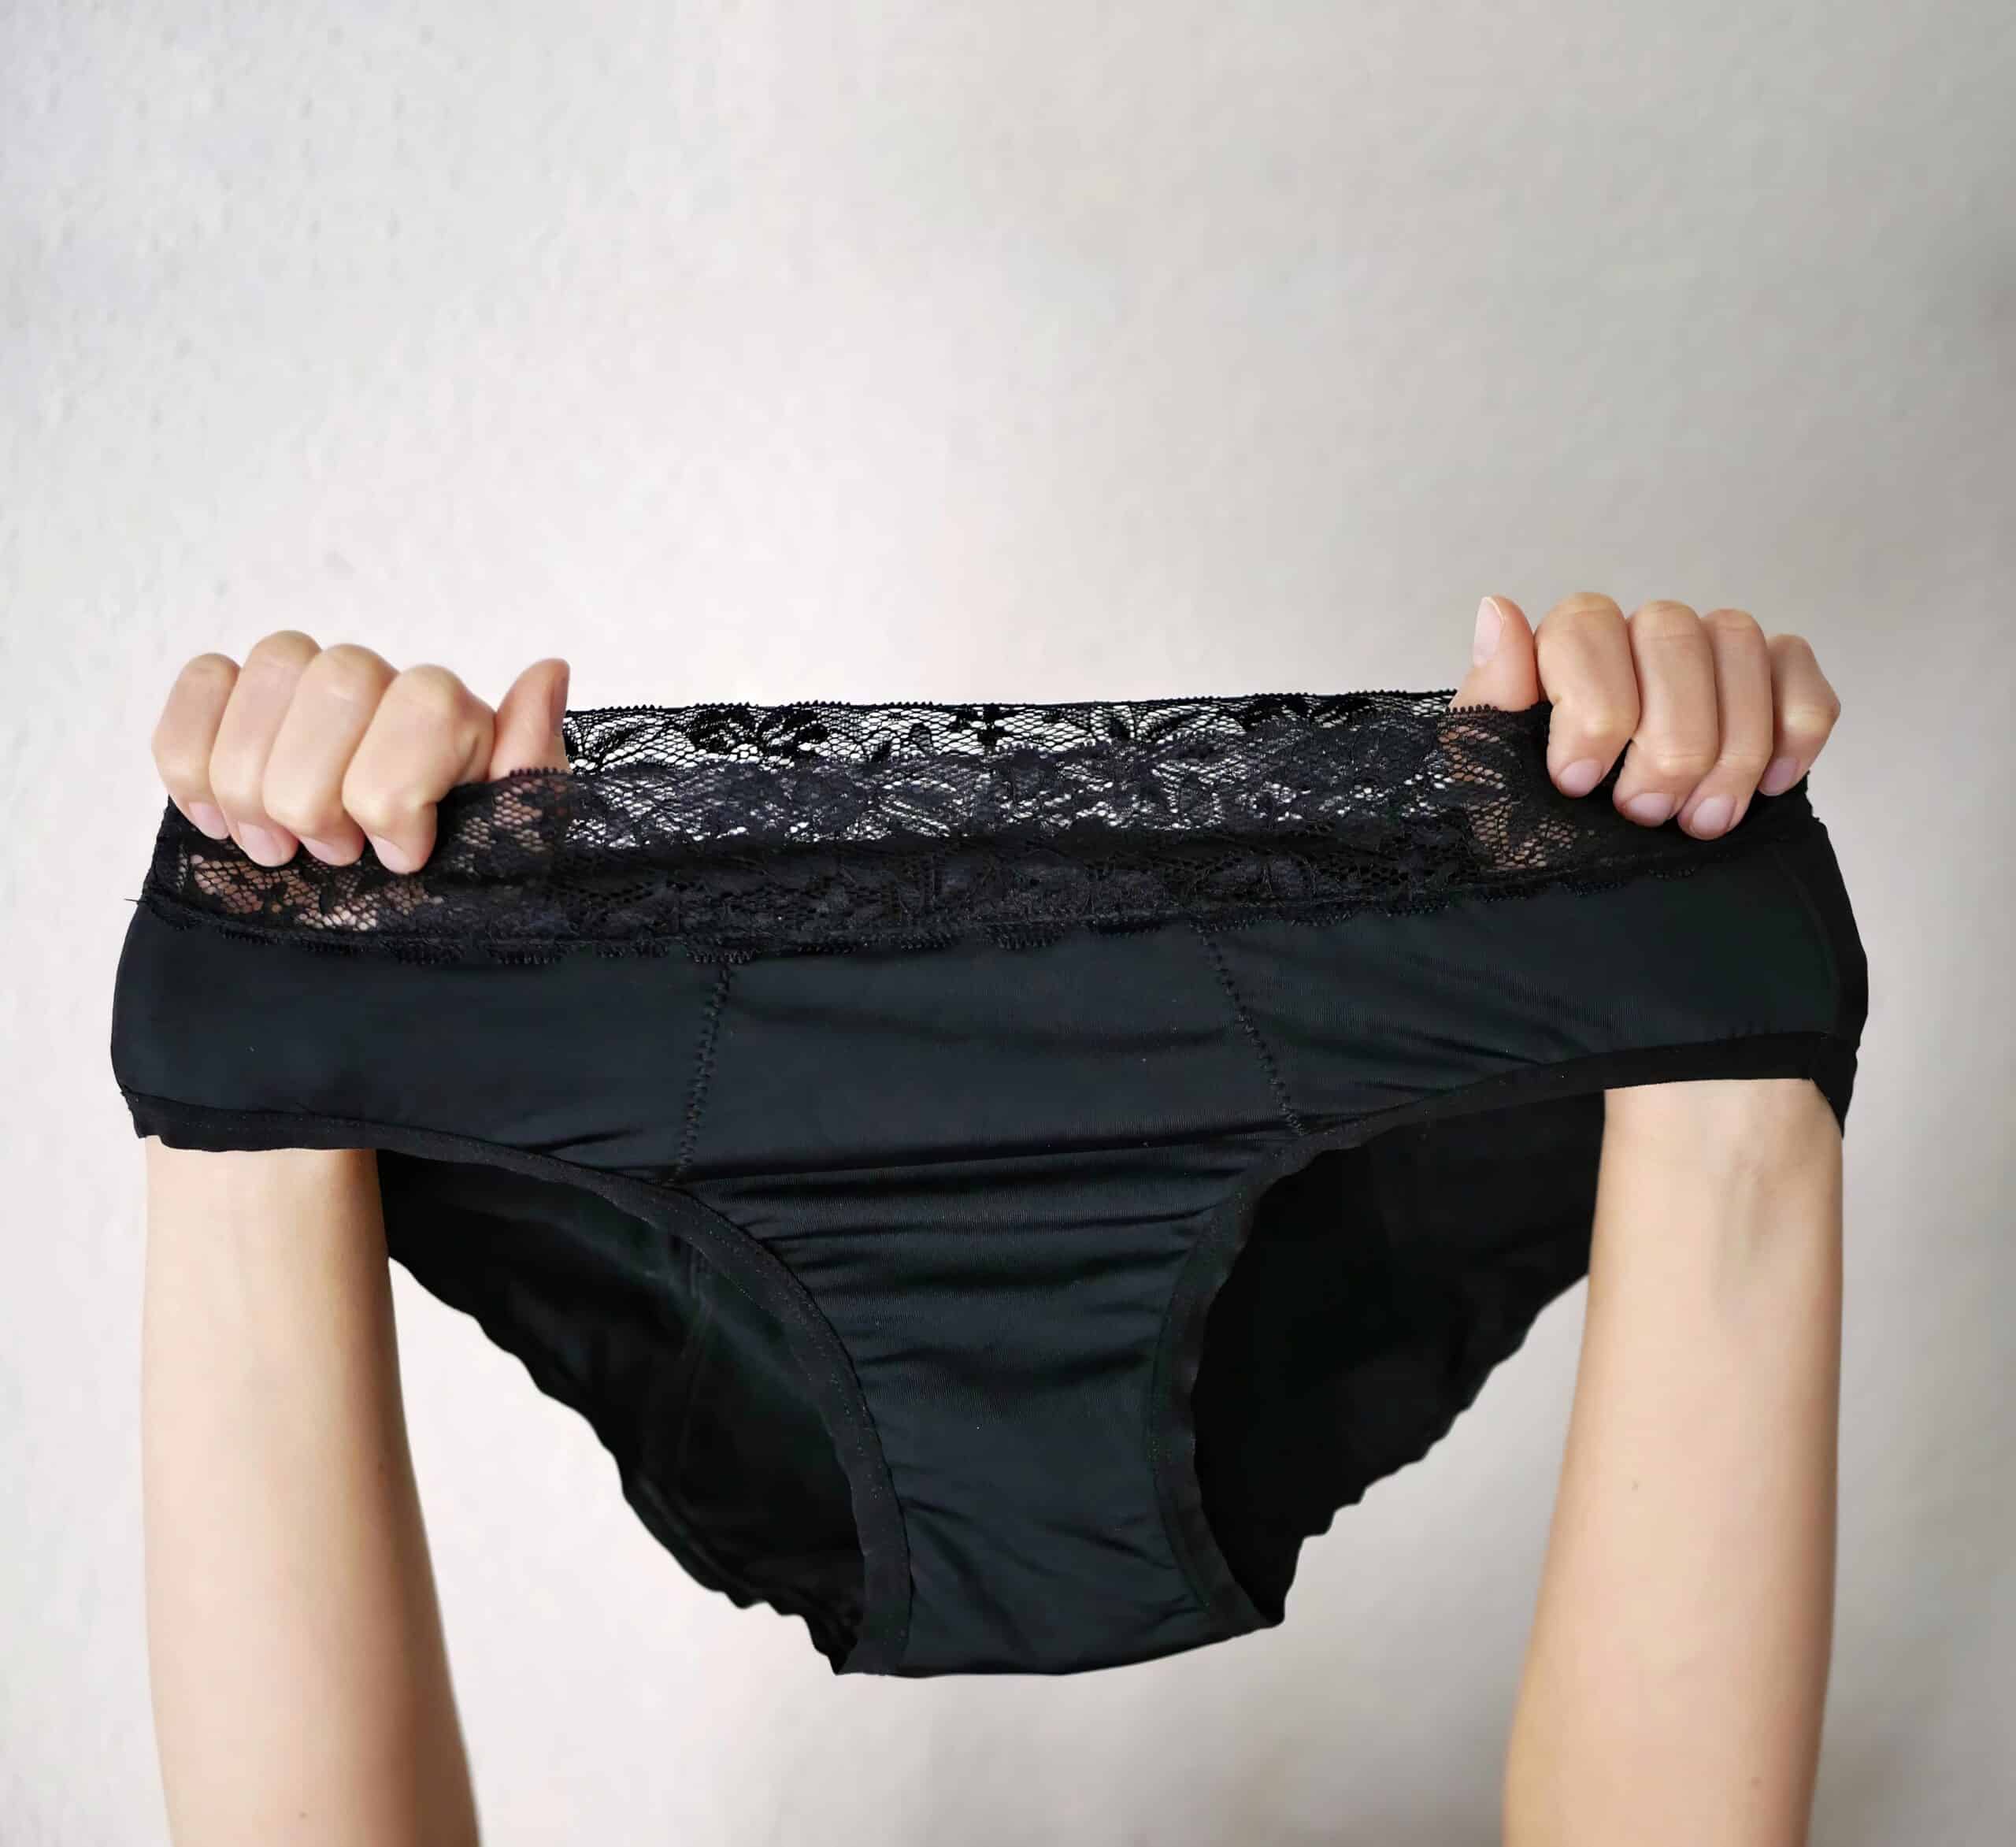 Cotton Vs Nylon Underwear: Which Is Better For Sensitive Skin